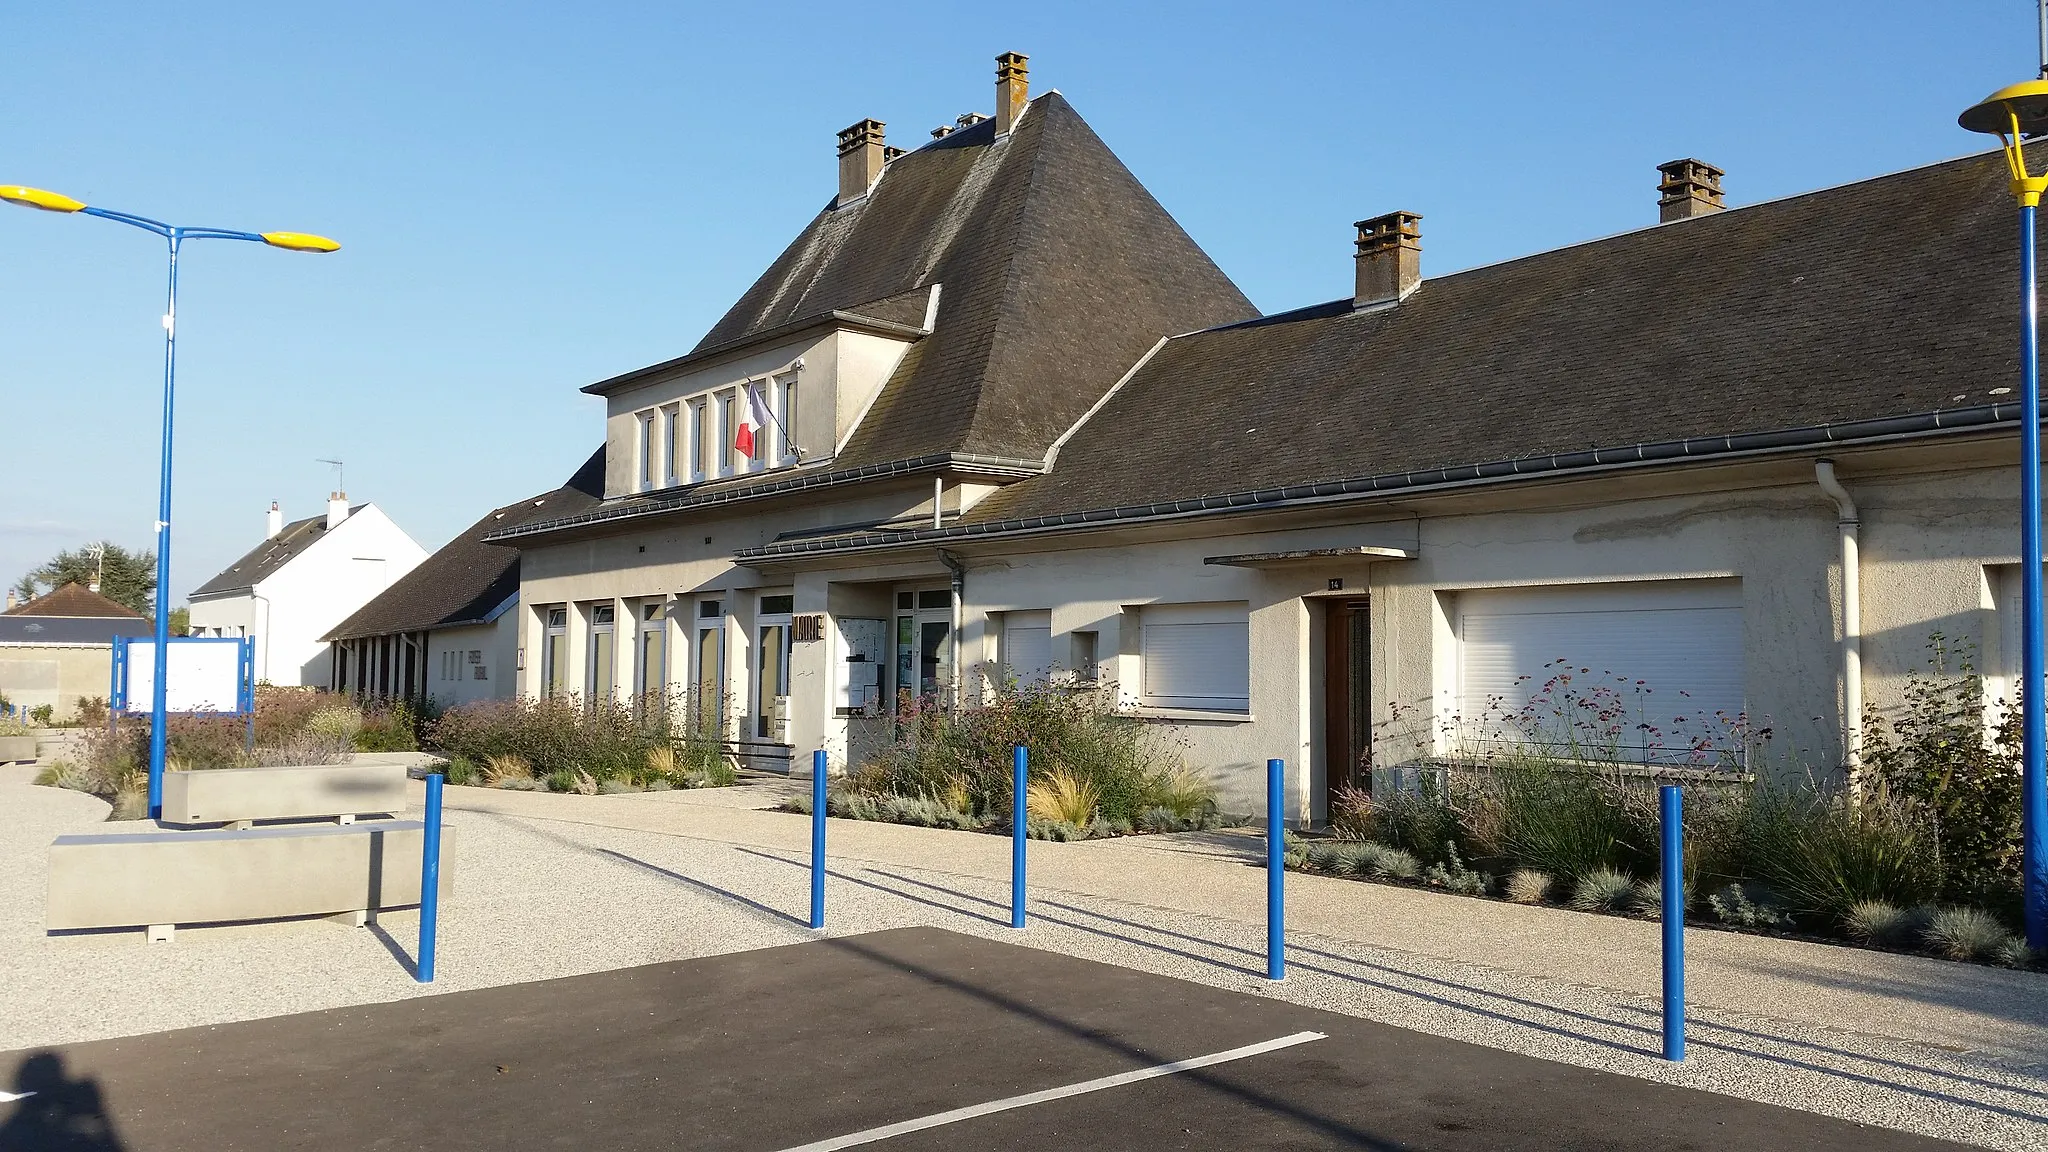 Photo showing: The town hall of Jallans, Eure-et-Loir, France.